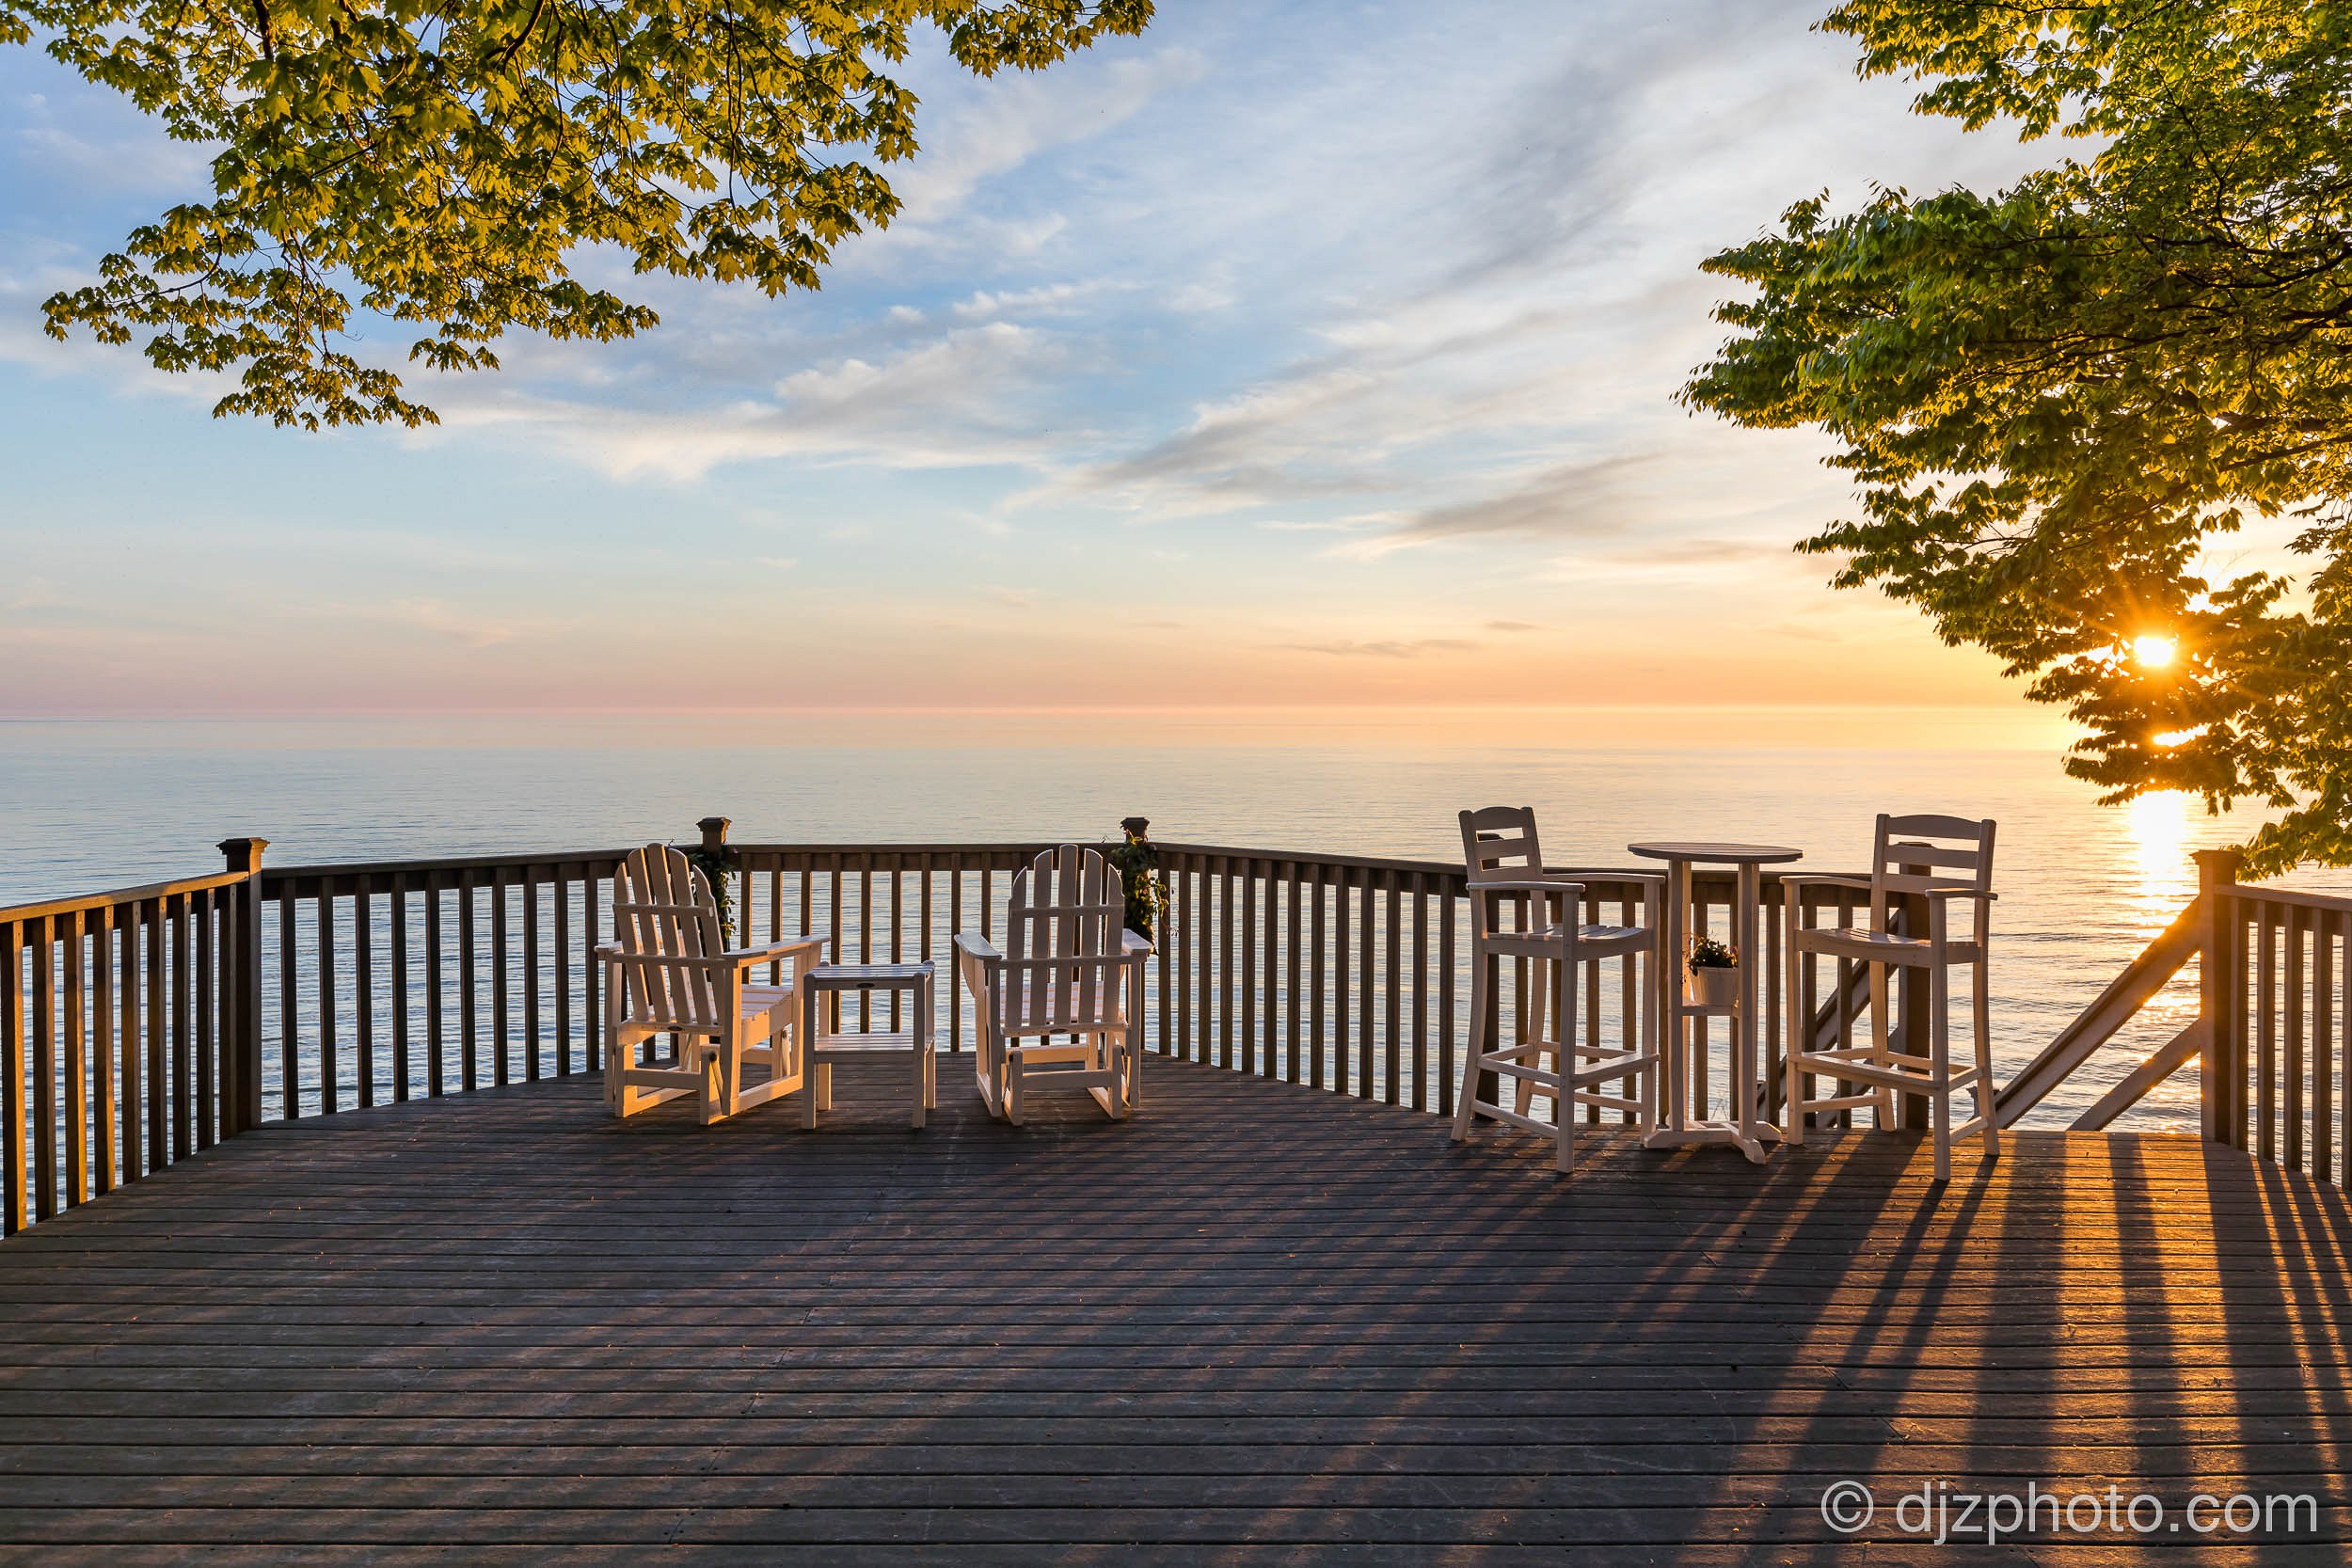 Real Estate Photography - Deck on Lake Michigan